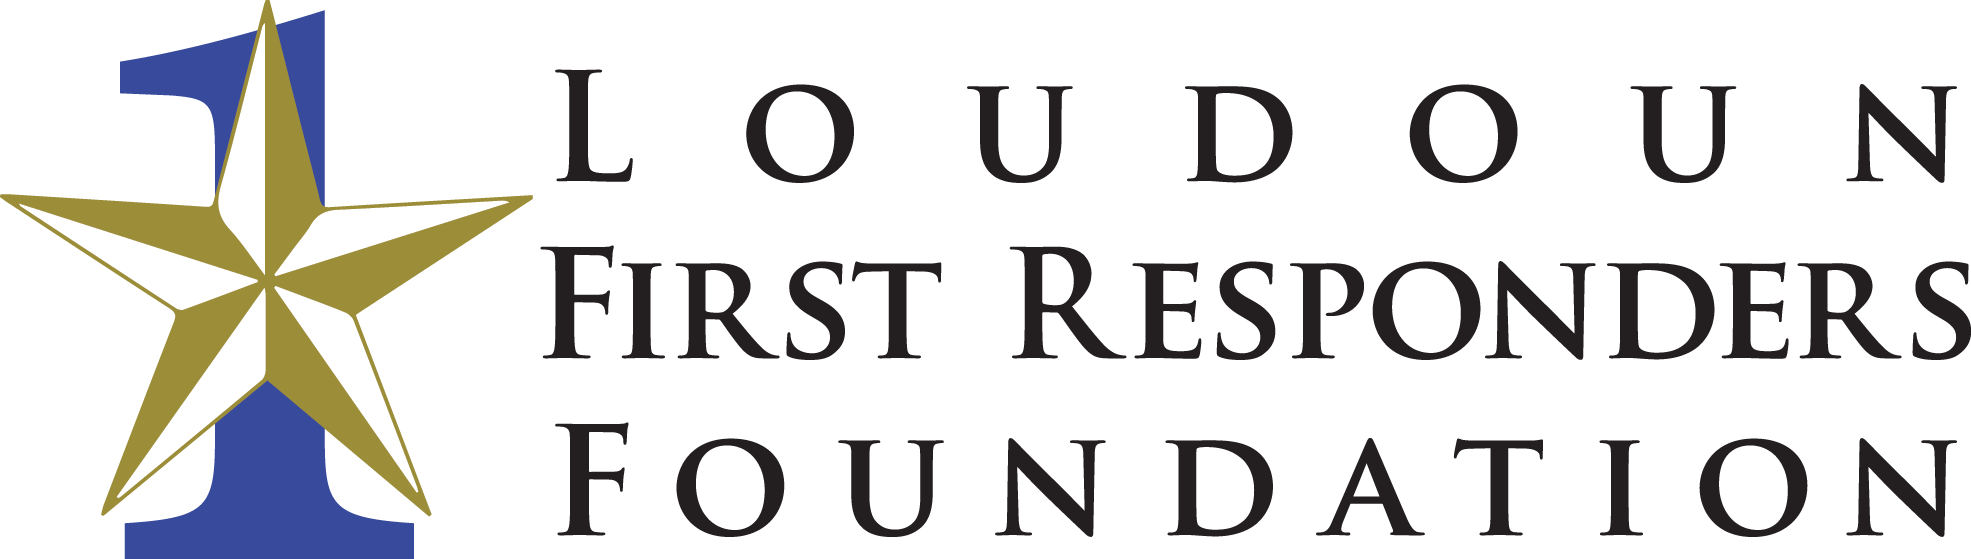 Loudoun First Responders Foundation